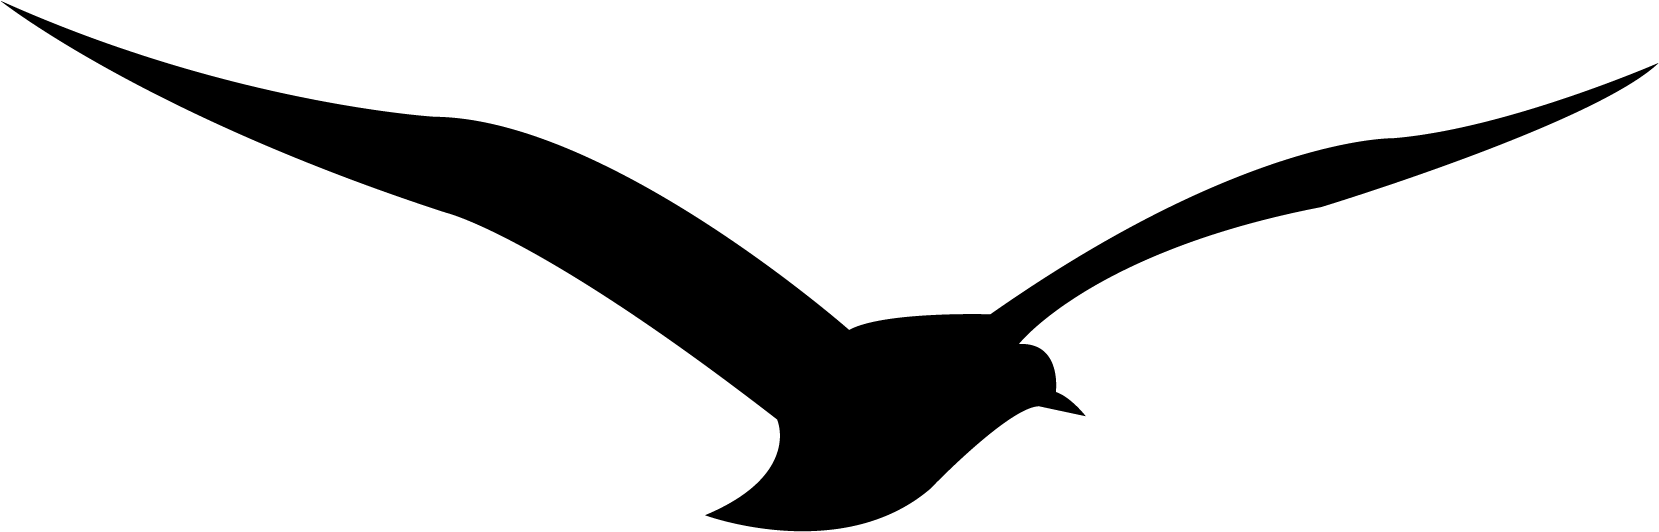 Calligraphy Alphabet Runic Z - European Swallow (1800x1800)